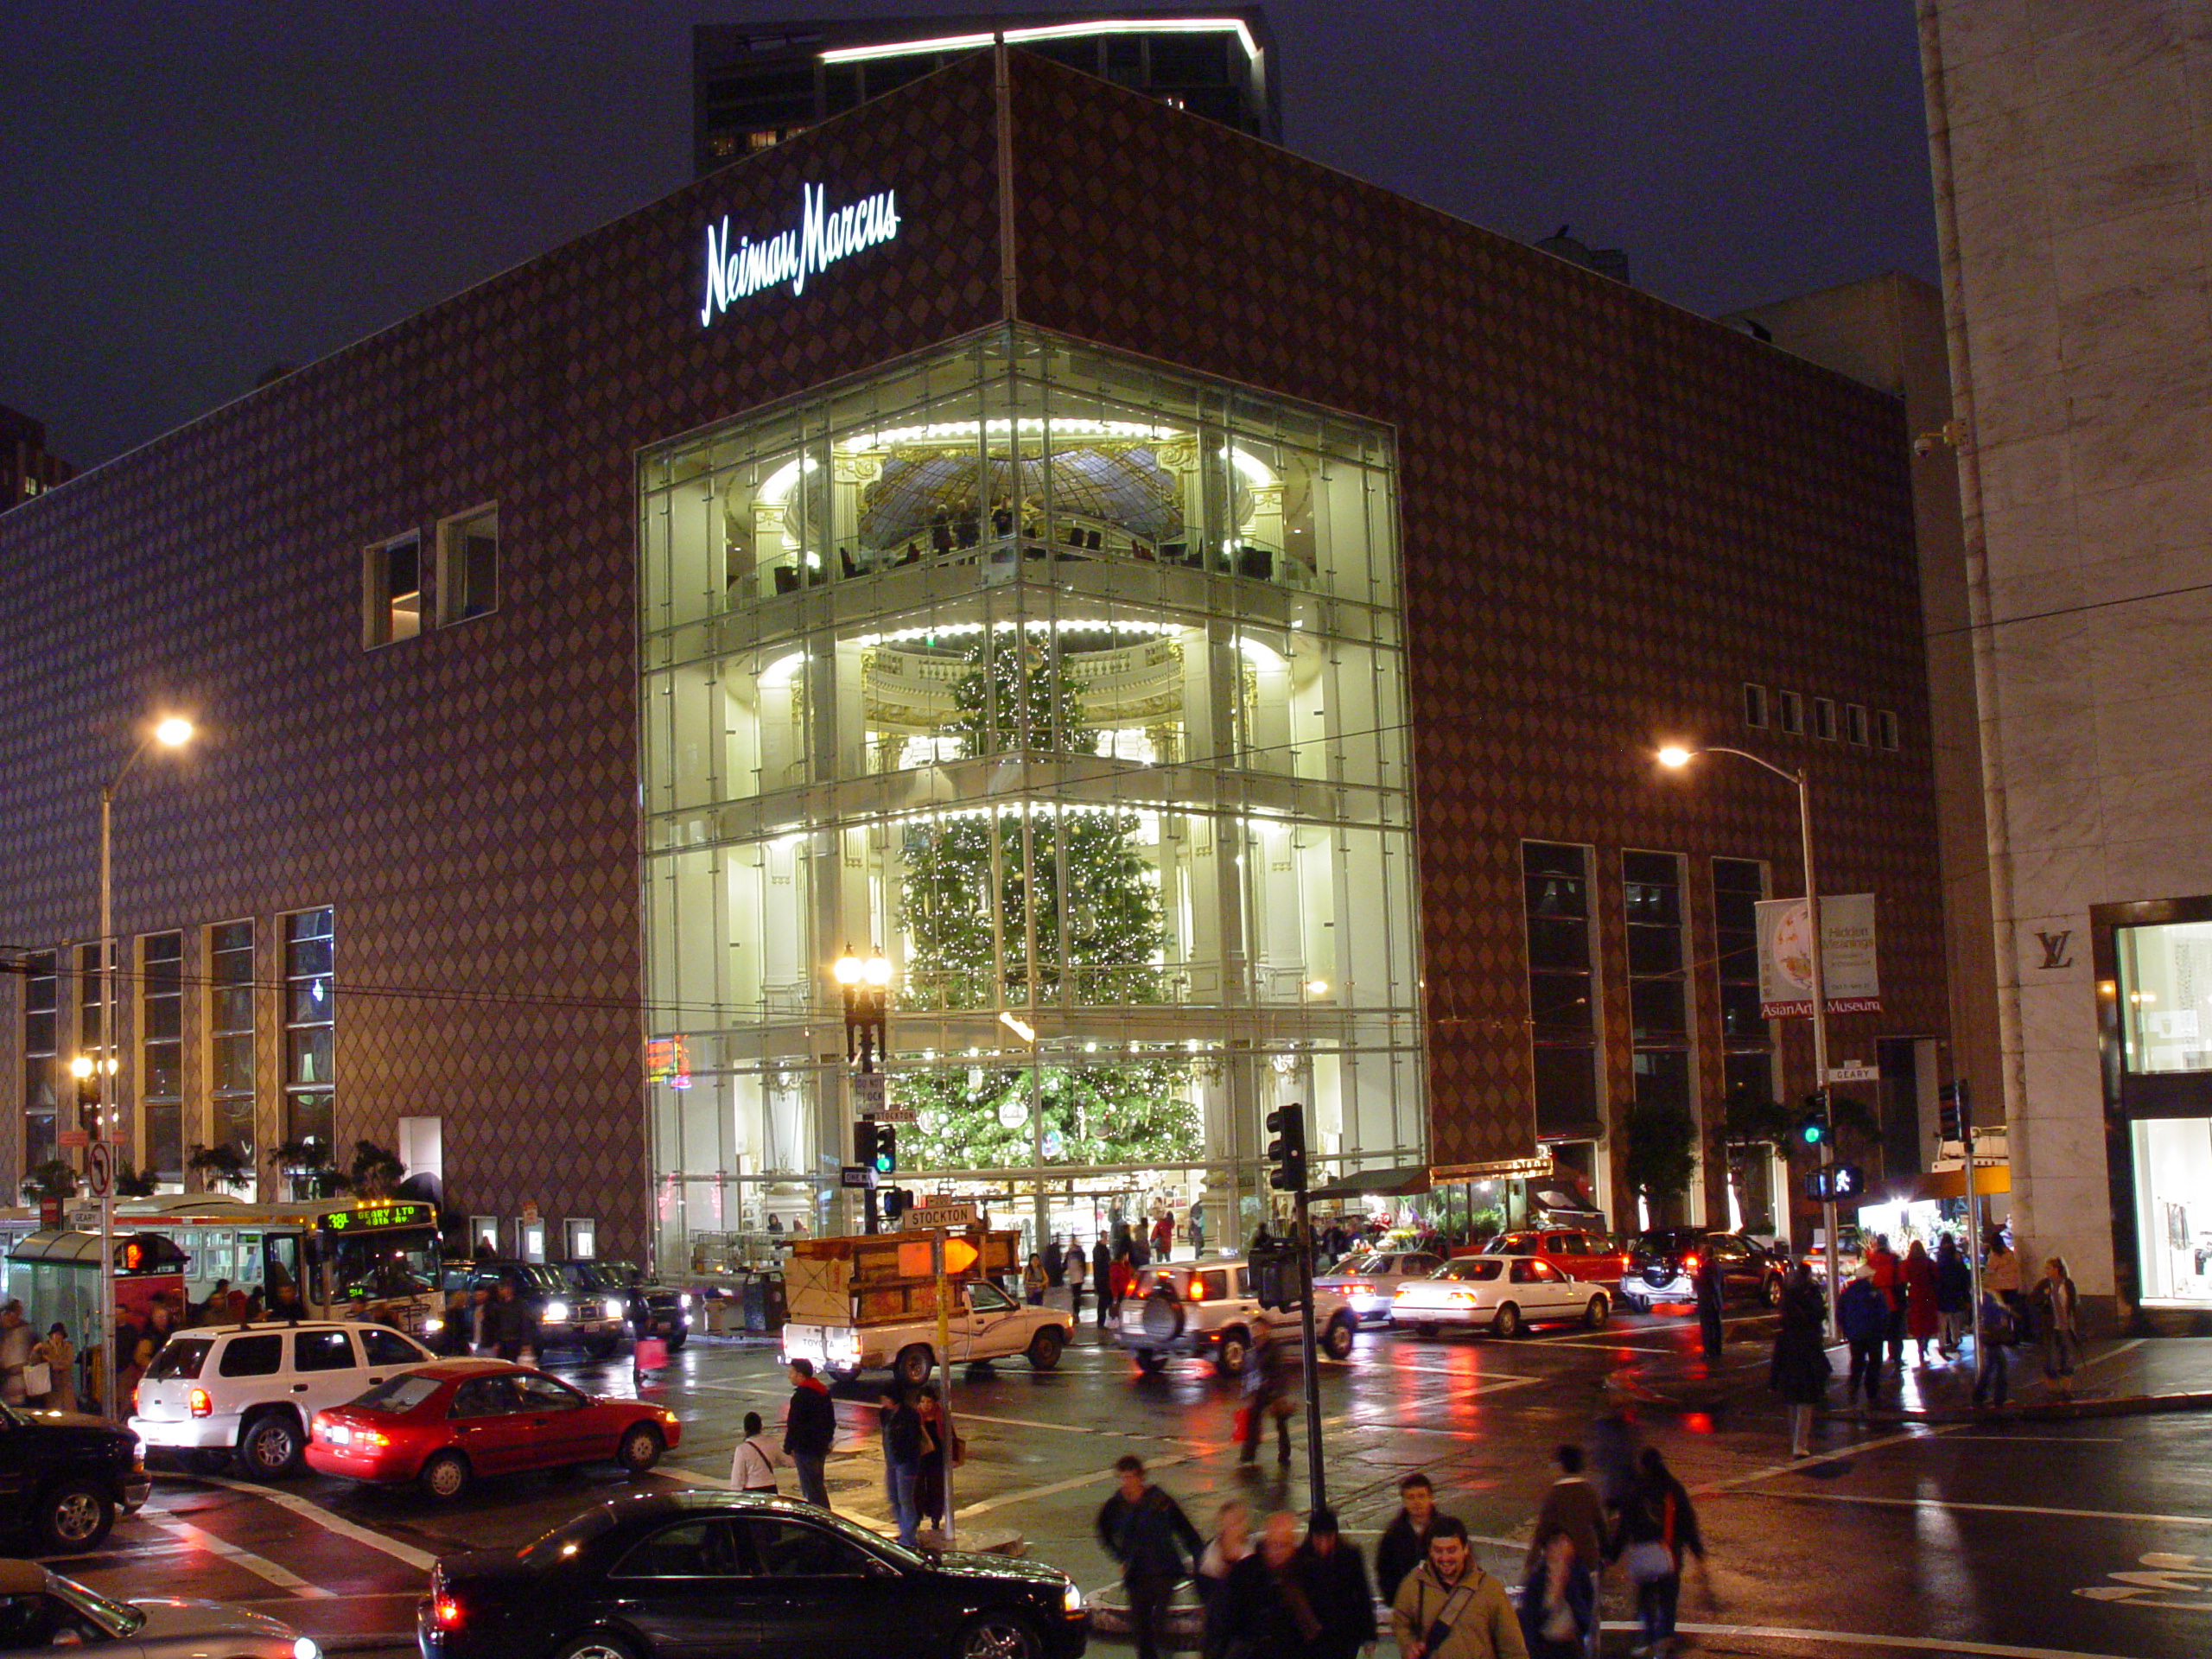 File:Neiman Marcus Boston.jpg - Wikipedia